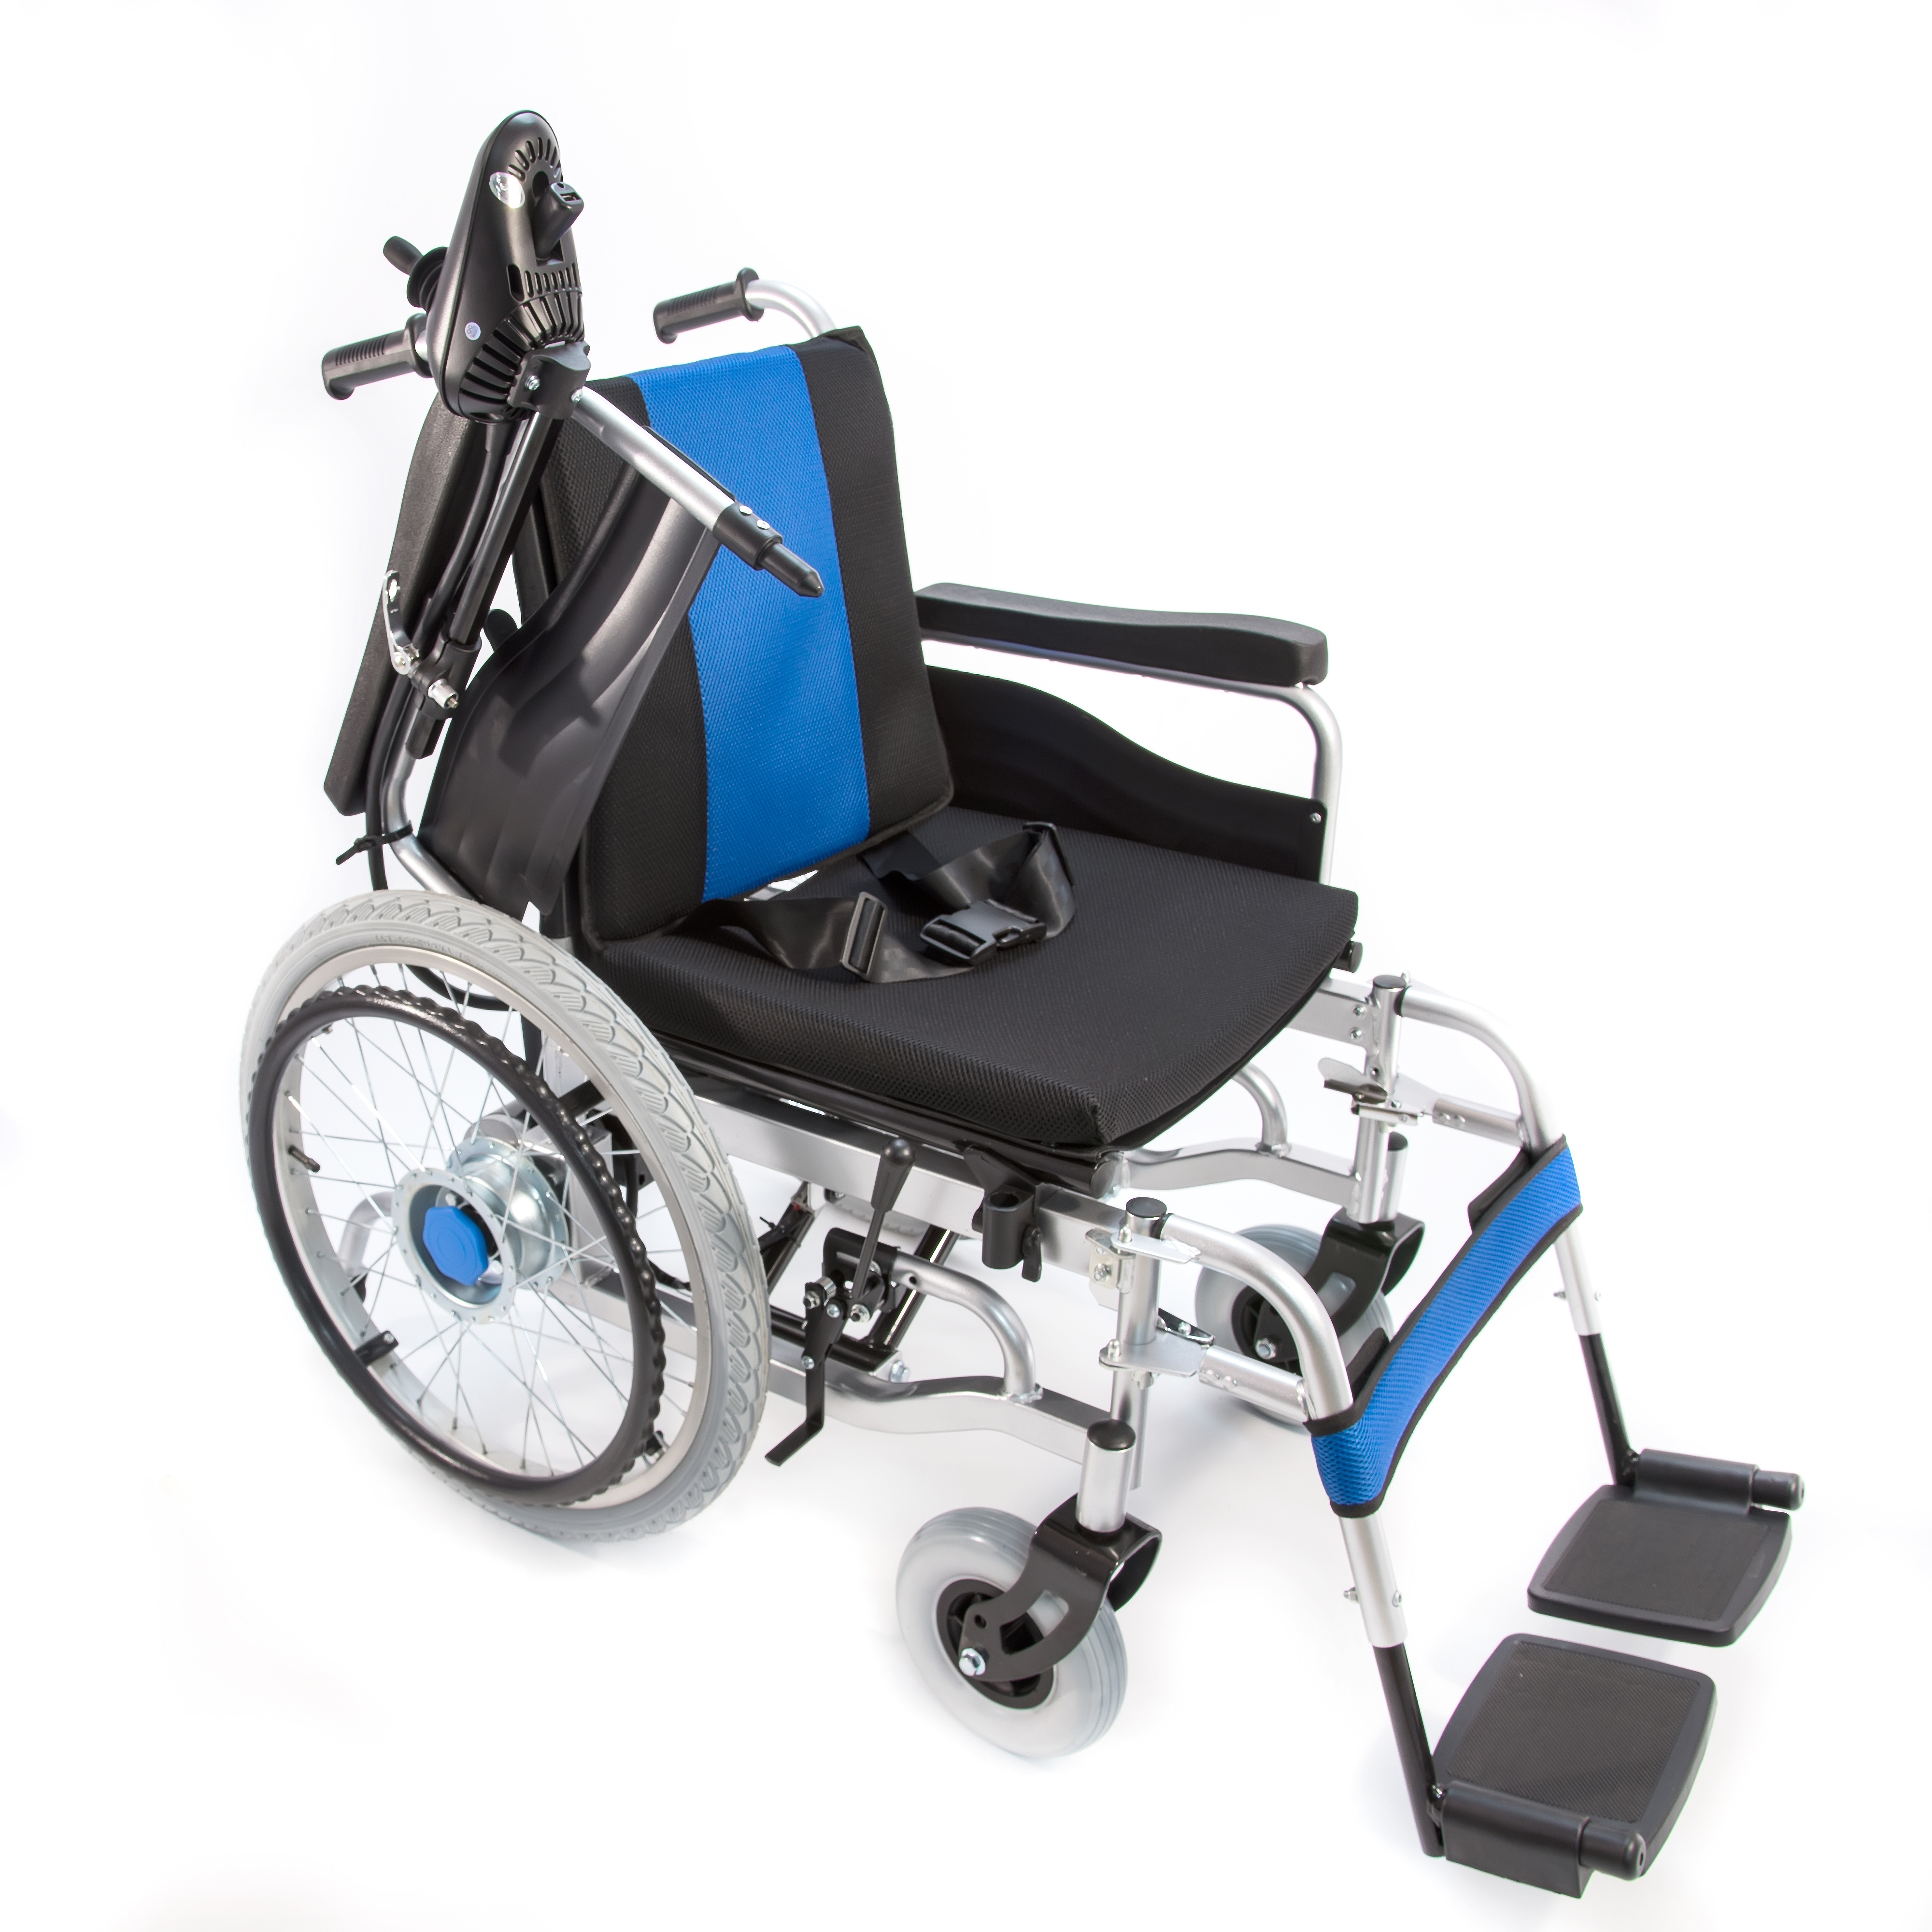 Коляски инвалидные с приводом цена. Кресло-коляска мега-Оптим fs101a с электроприводом. Электроколяска Армед fs101a. Инвалидная коляска с электроприводом мега-Оптим. Коляска мега Оптим с электроприводом.